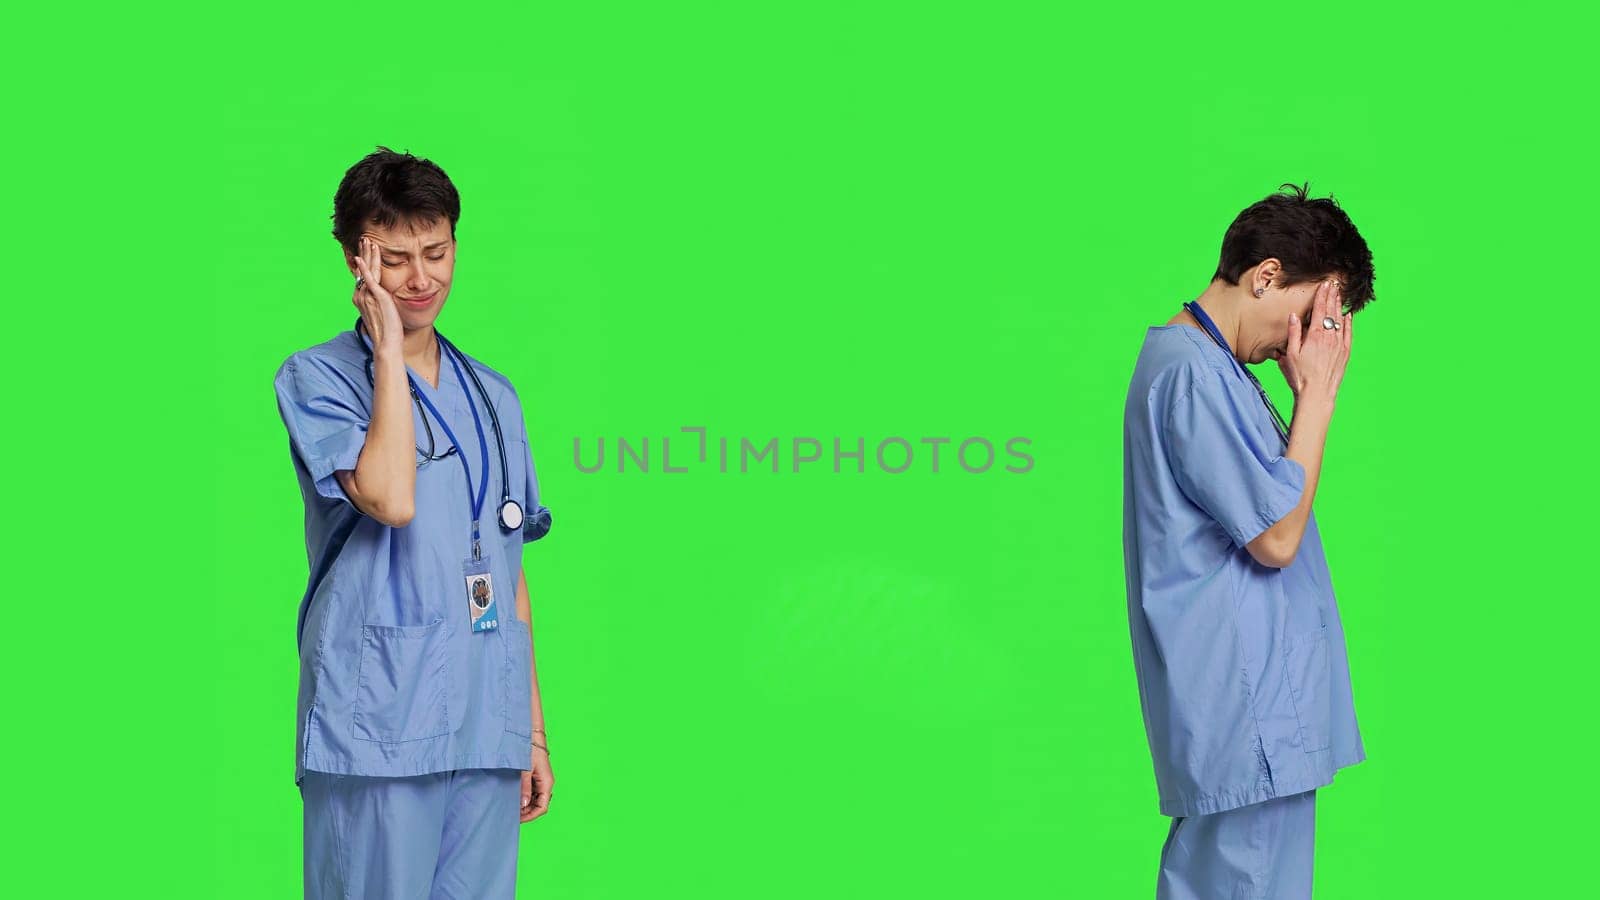 Unwell nurse suffering from a headache against greenscreen backdrop by DCStudio